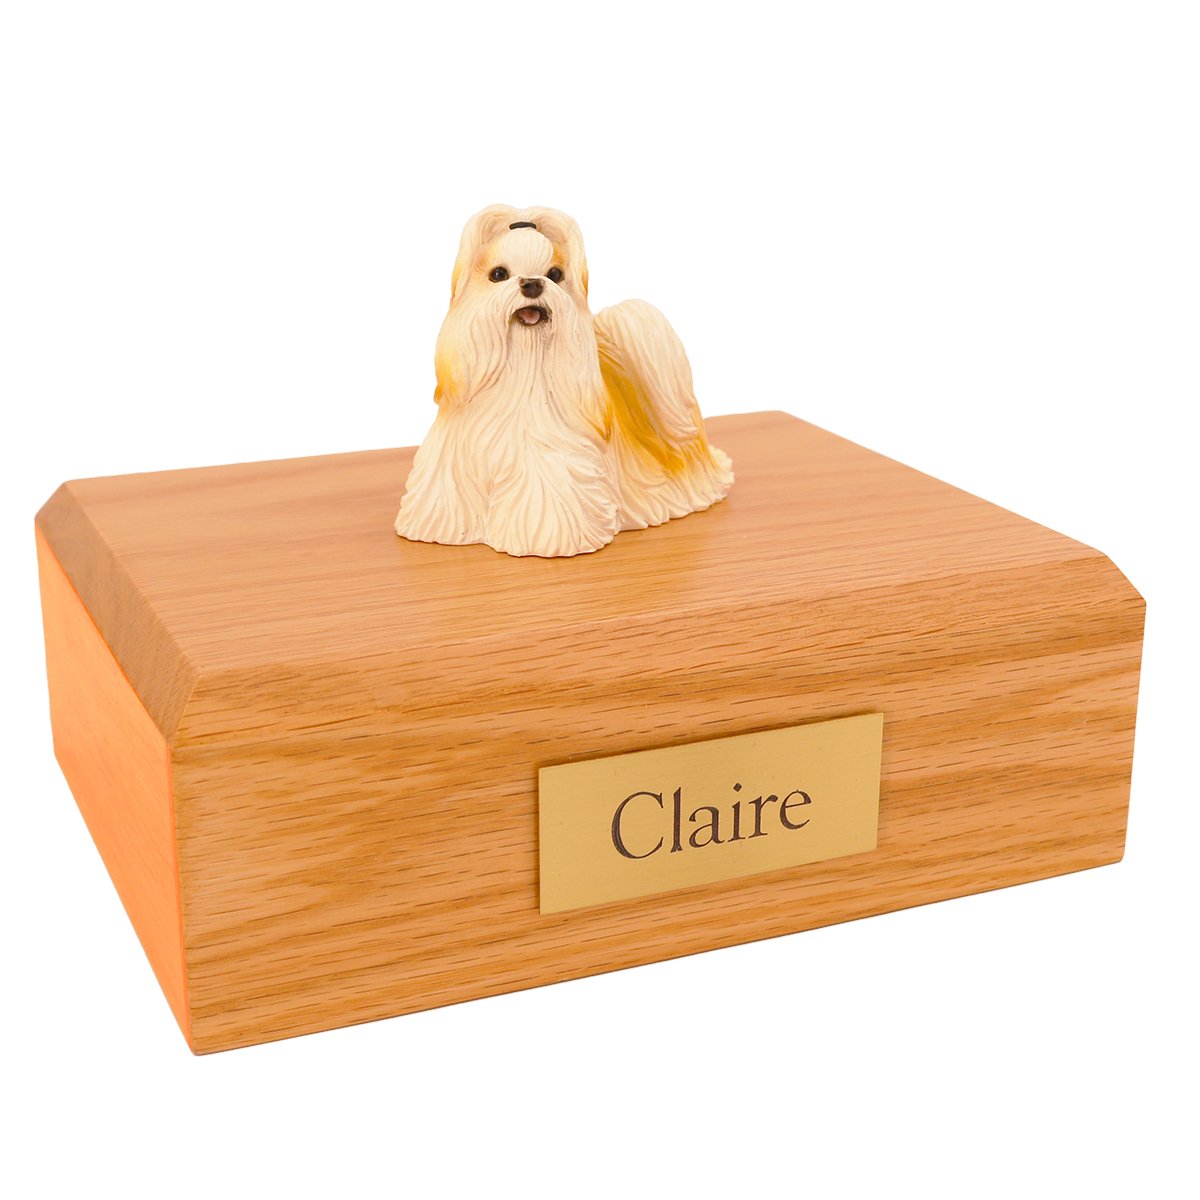 Dog, Shih Tzu, Gold/White - Figurine Urn